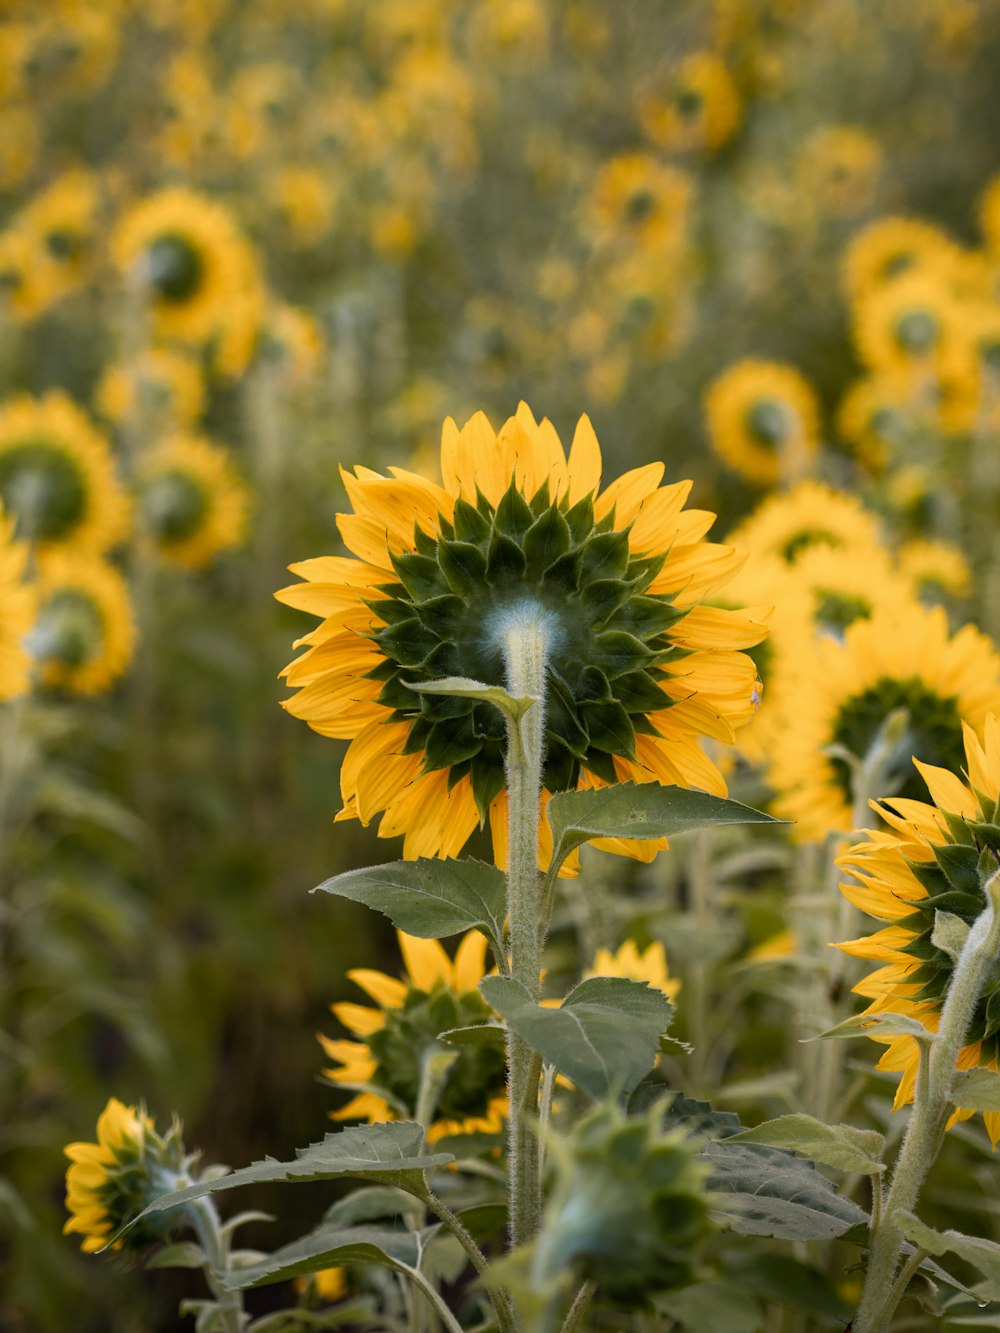 depth photography of yellow sunflower field